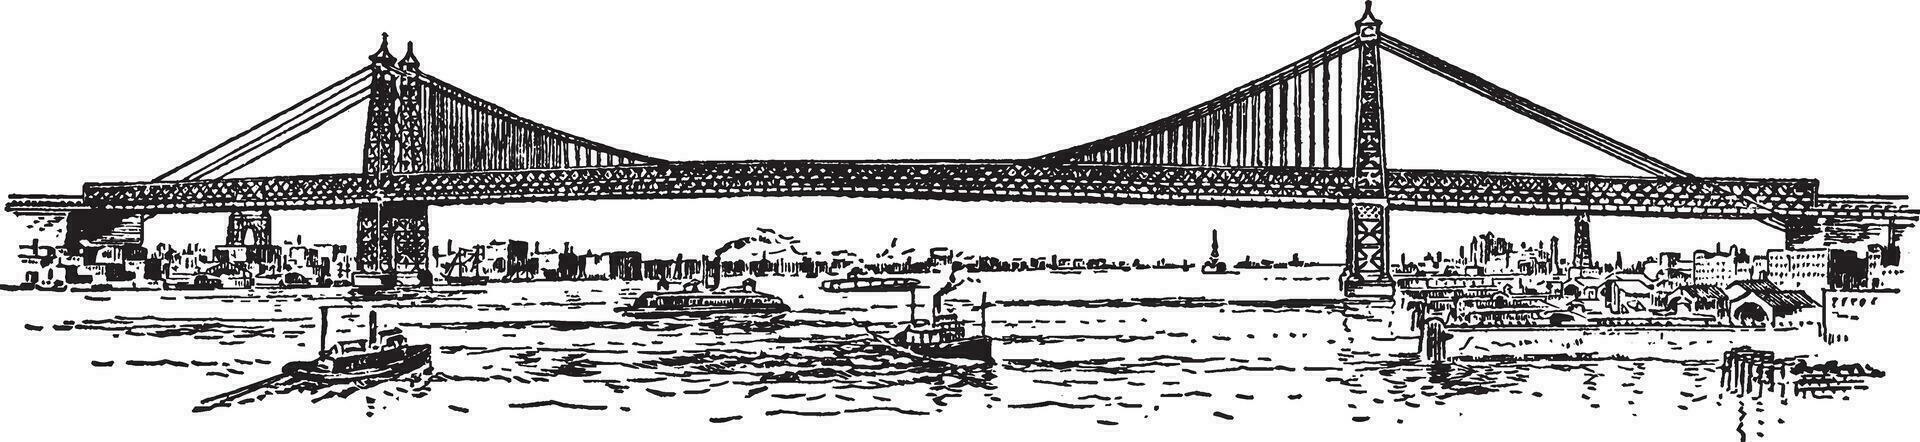 Williamsburg pont, ancien illustration. vecteur